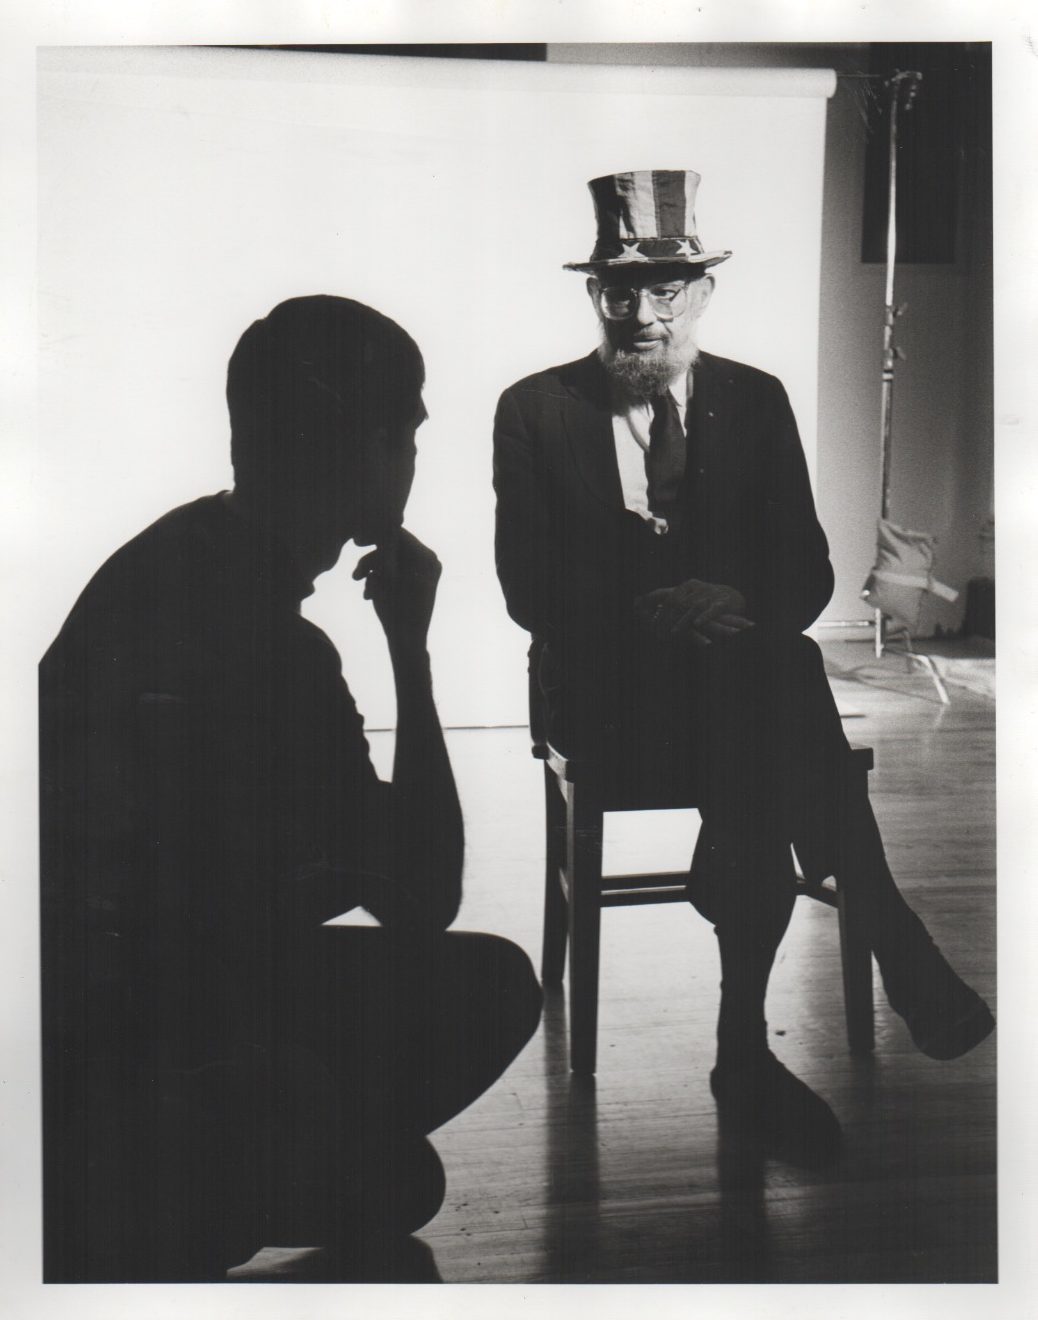 64. RUTKOWSKI, Richard (photographer) [Allen Ginsberg]. [Photograph of Allen Ginsberg and Gus Van Sant]. Image